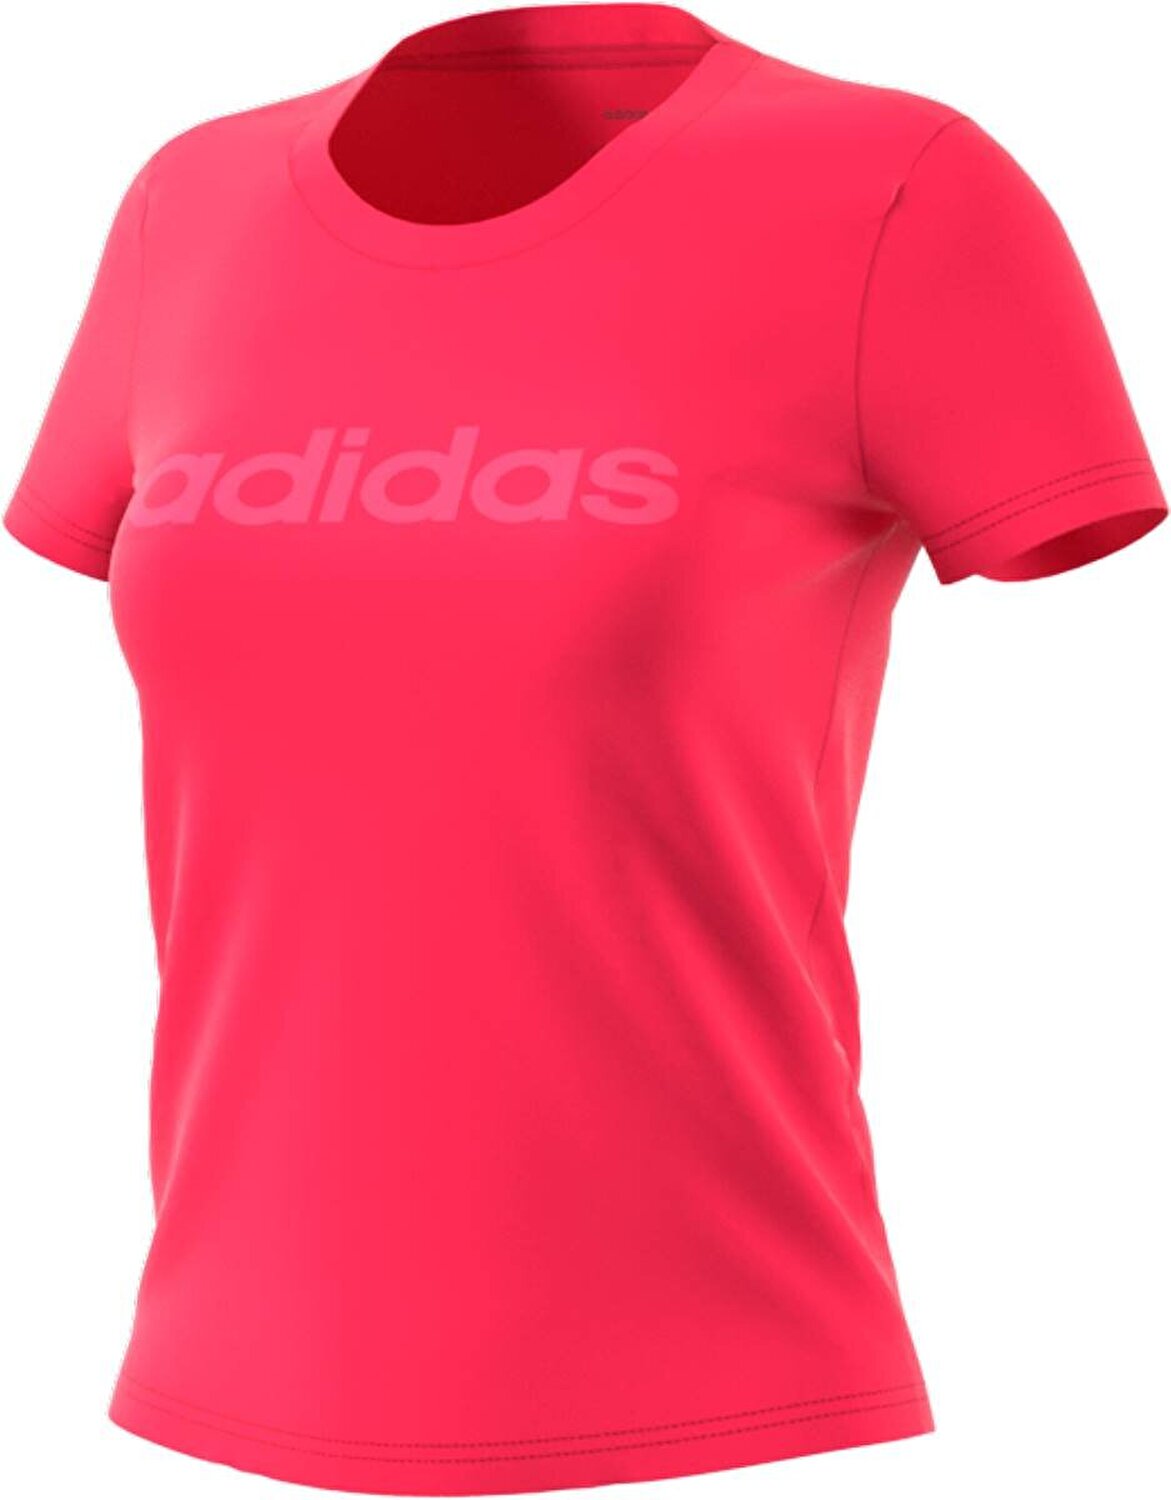 Adidas women’s training t-shirt